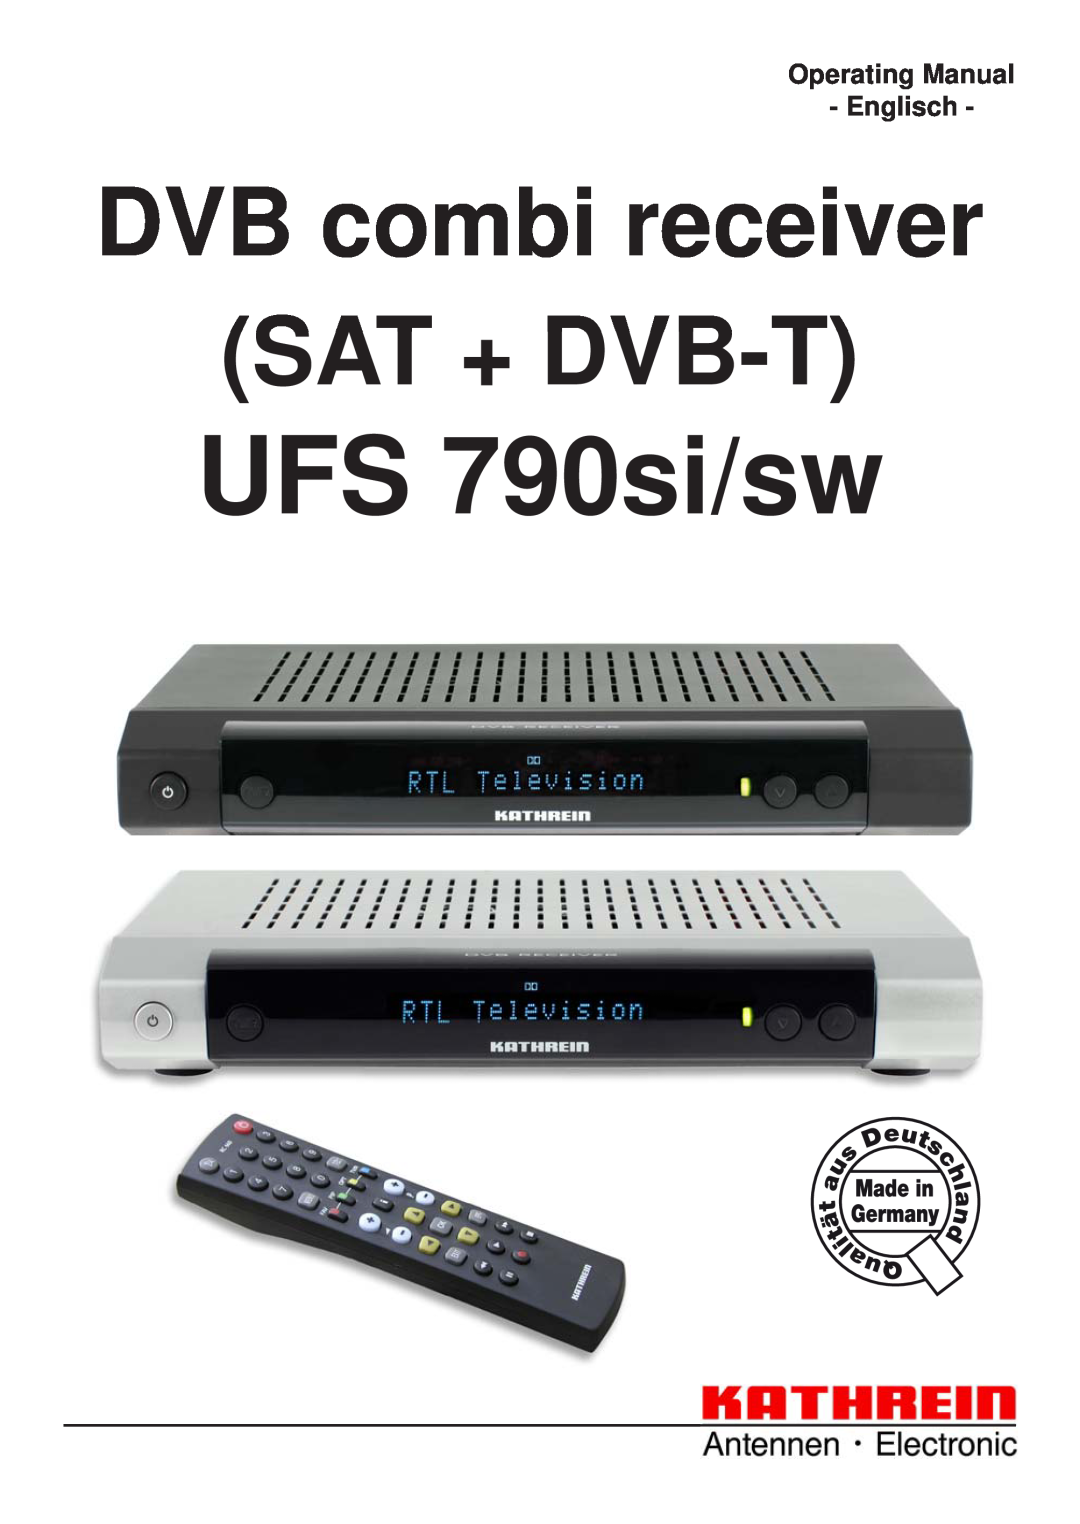 Kathrein UFS 790sw manual Operating Manual Englisch, UFS 790si/sw, DVB combi receiver SAT + DVB-T 